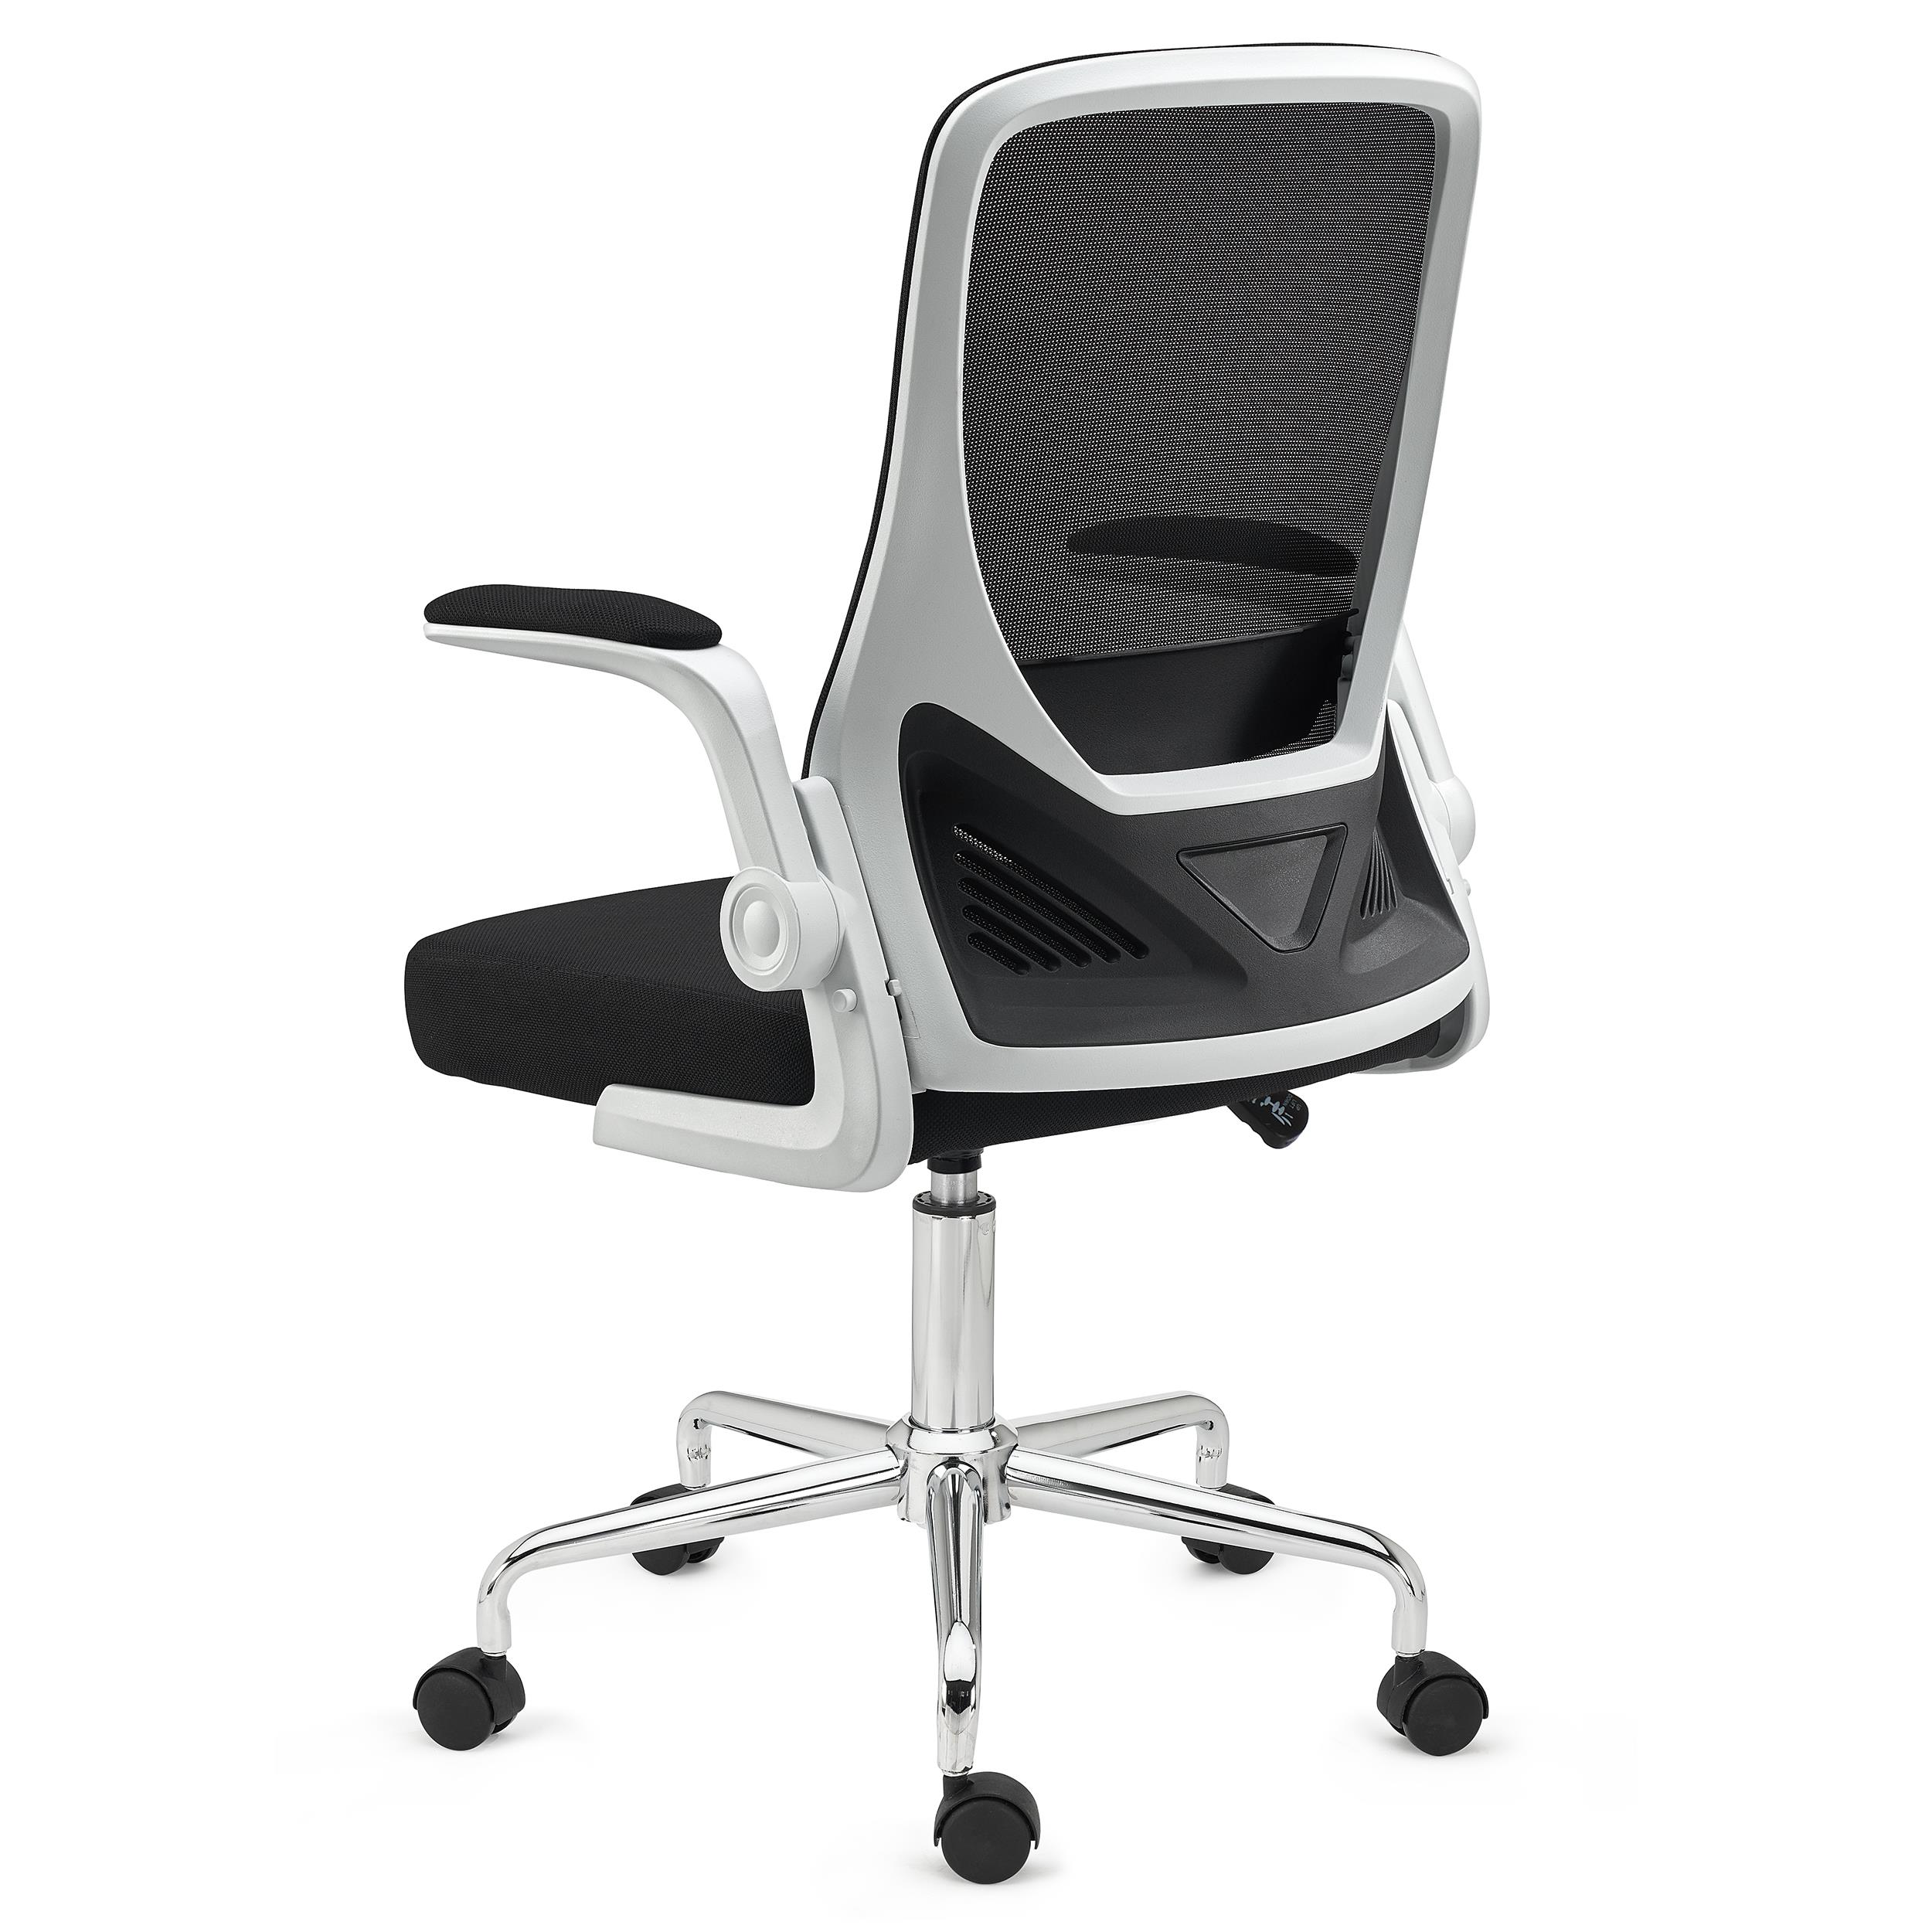  Silla de oficina plegable con tablero de escribir, silla de escritorio  plegable con ruedas, silla de oficina ergonómica con brazos, cómoda silla  de oficina en casa, asiento acolchado de piel sintética